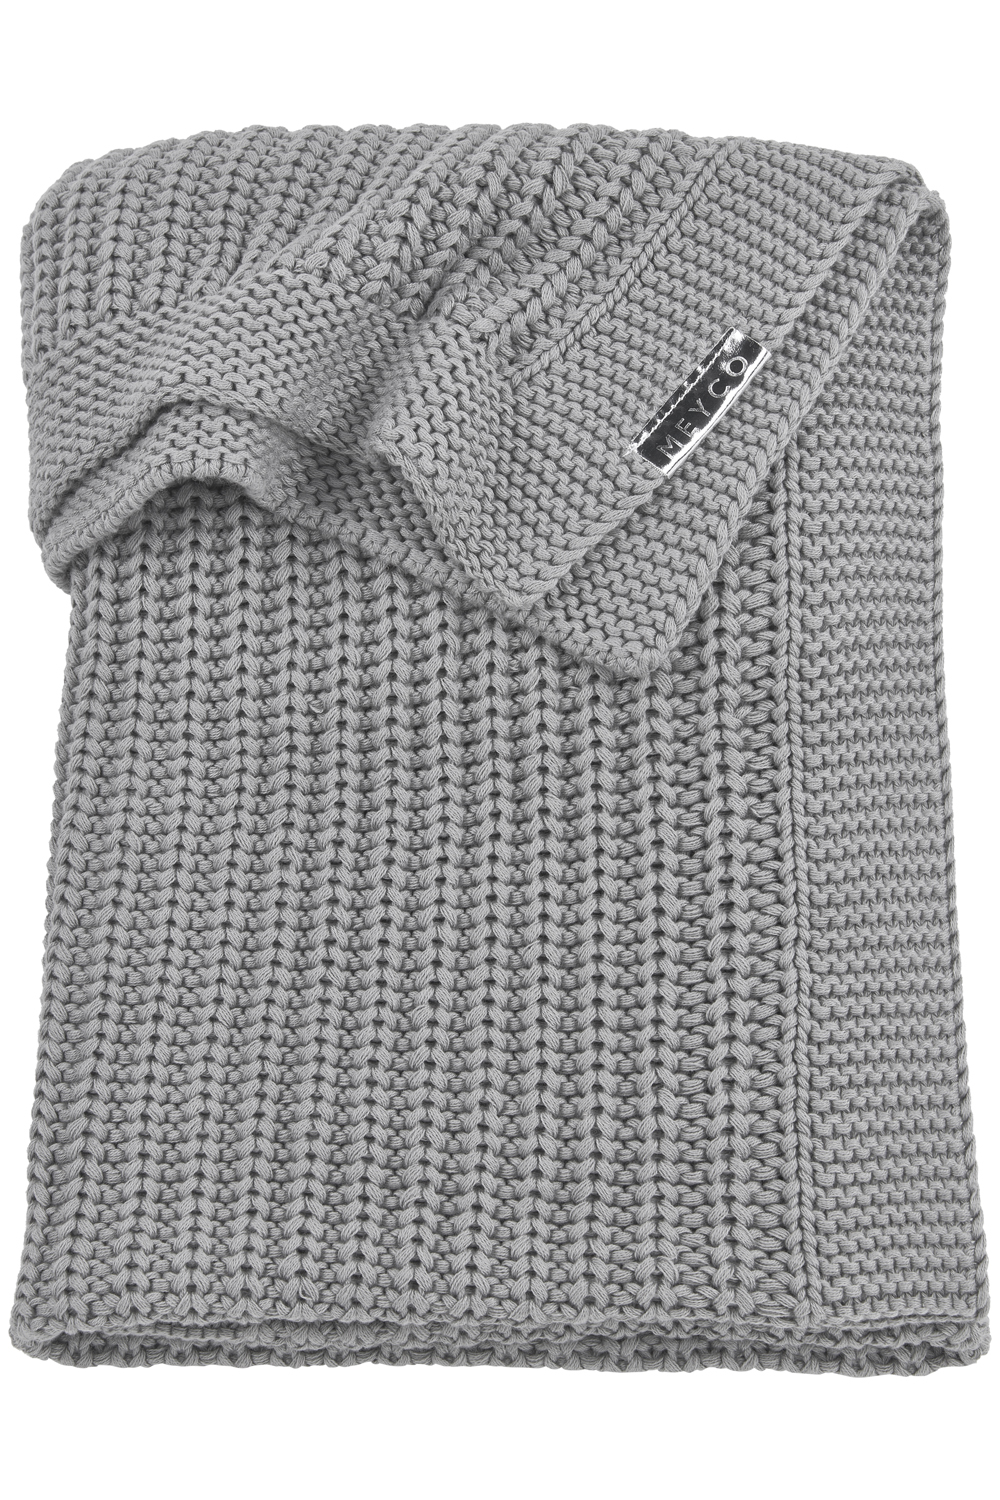 Ledikant deken Herringbone - grey - 100x150cm